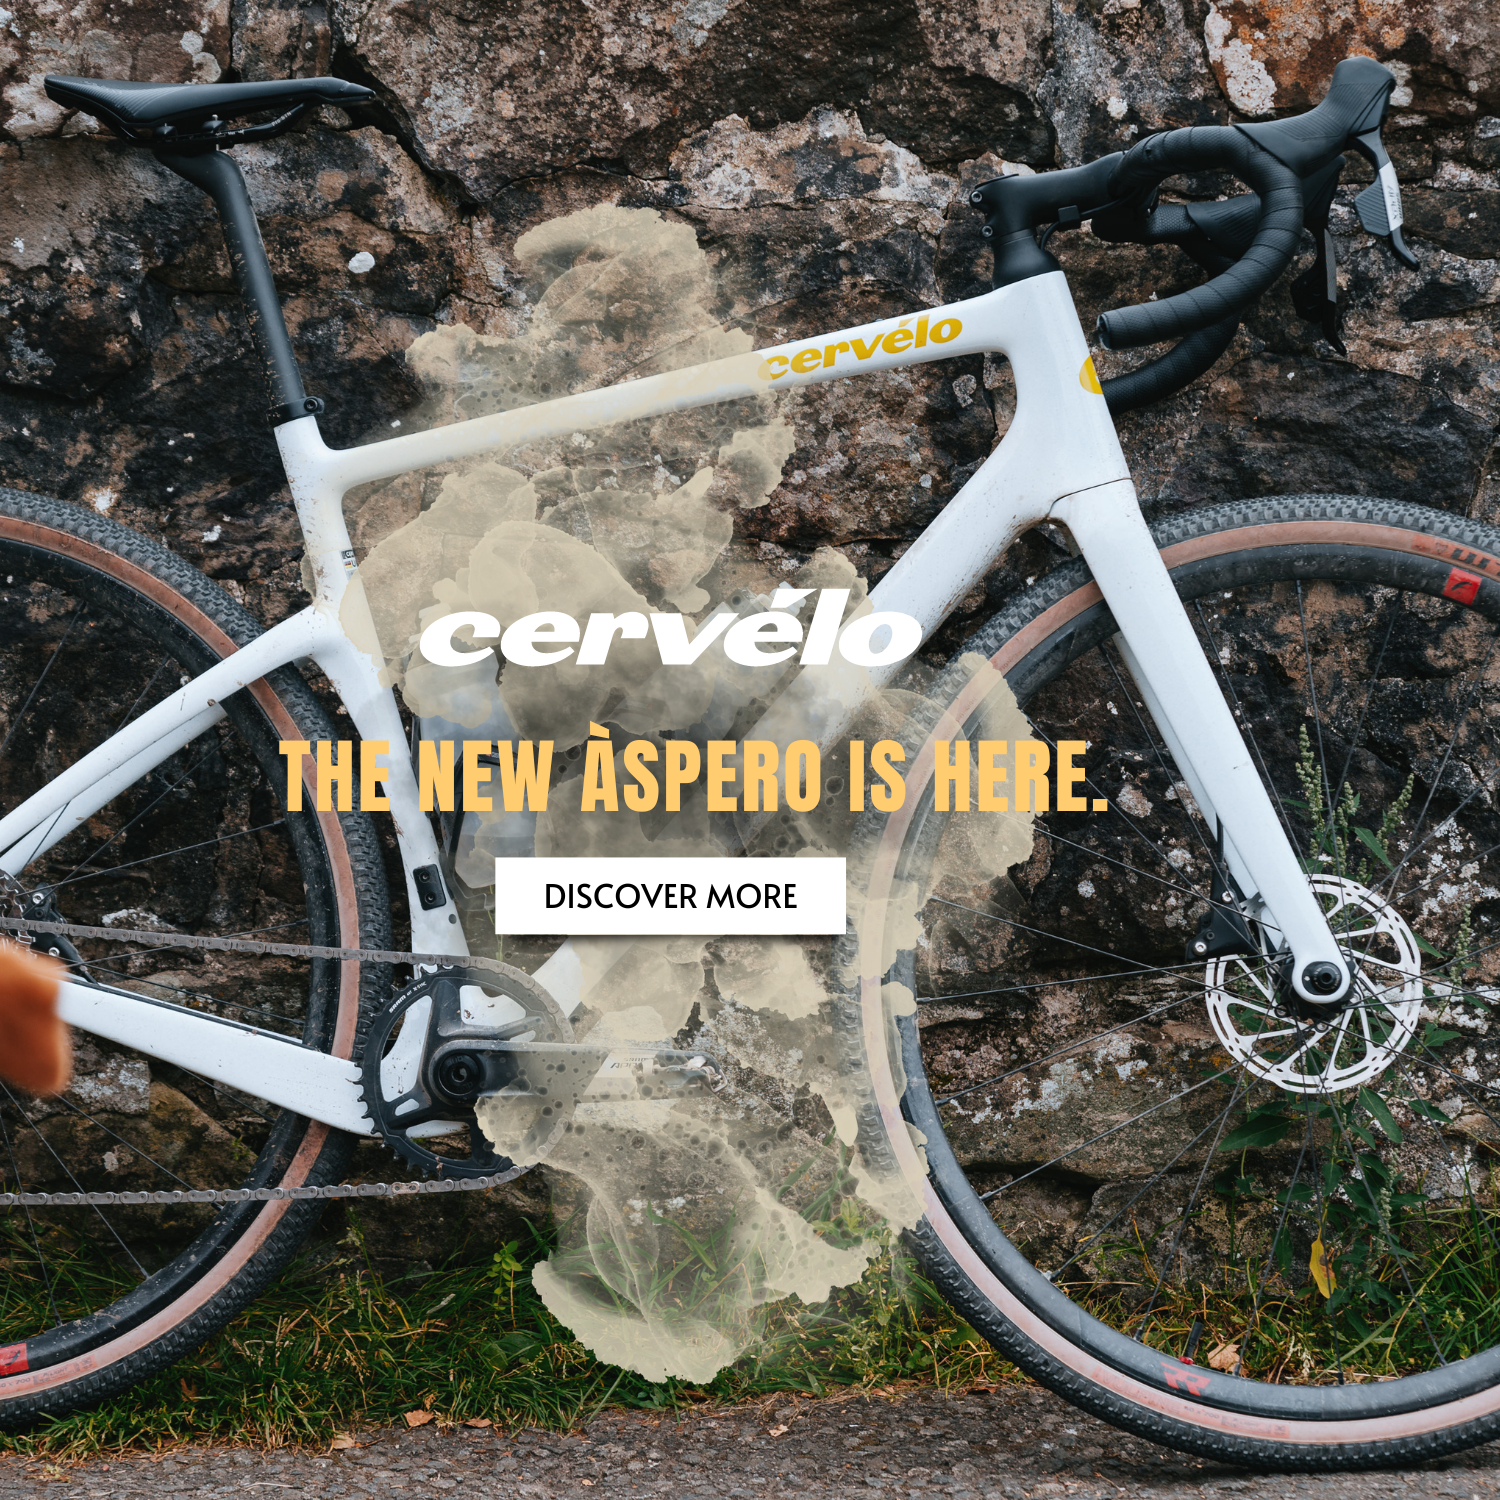 Discover the new Aspero at Jonito